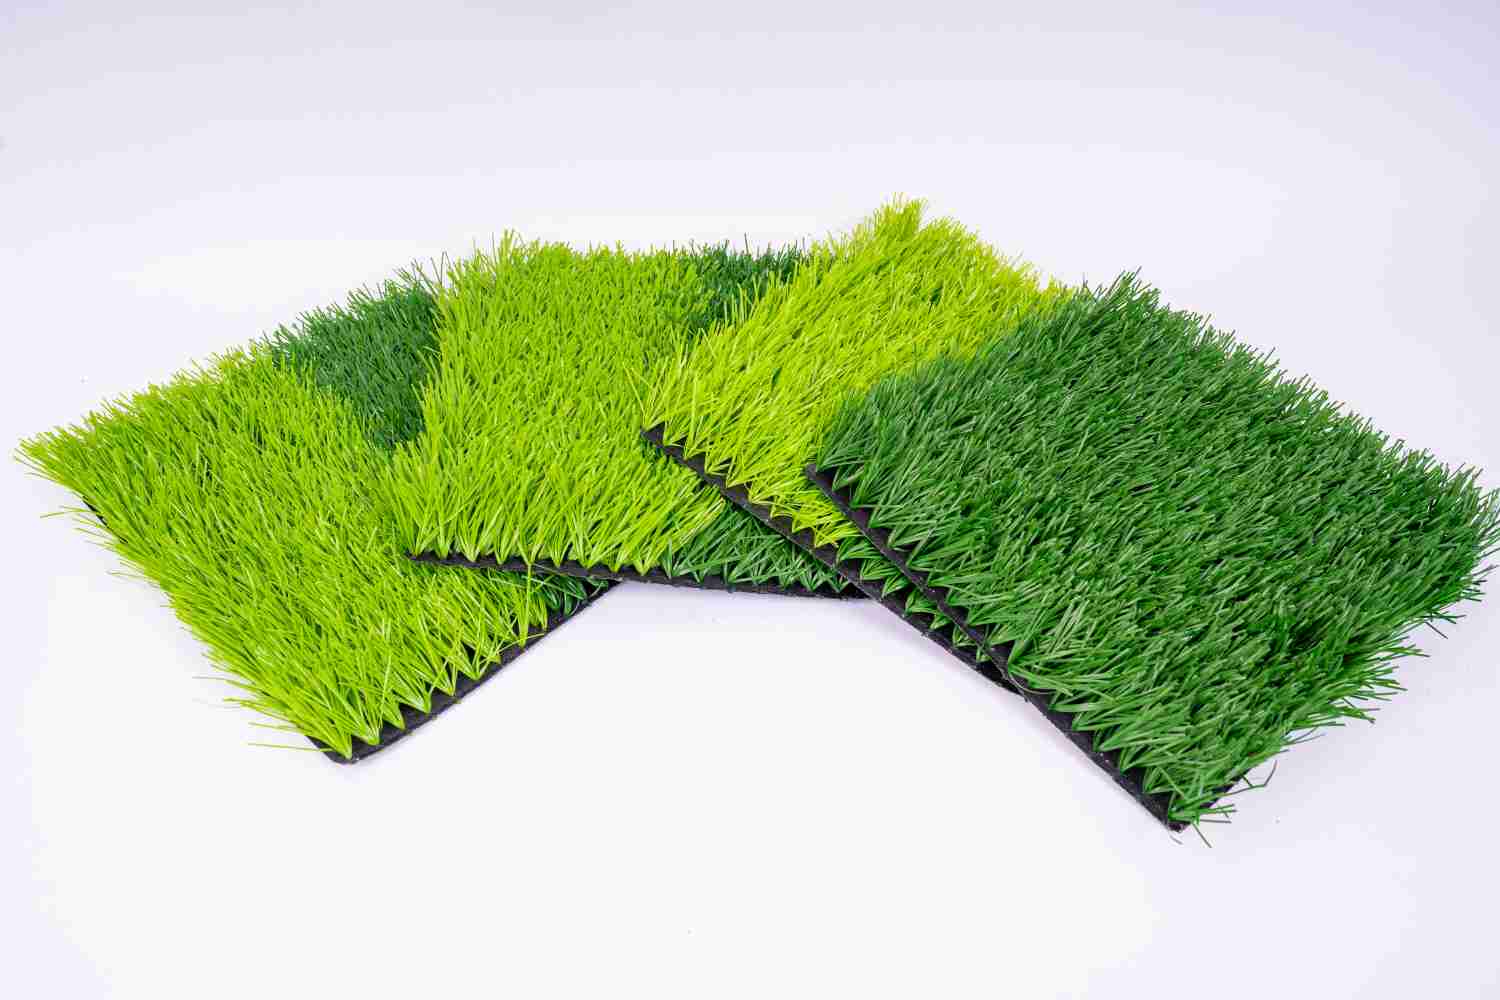 50mm tufted pile football turf S-shape soccer grass 